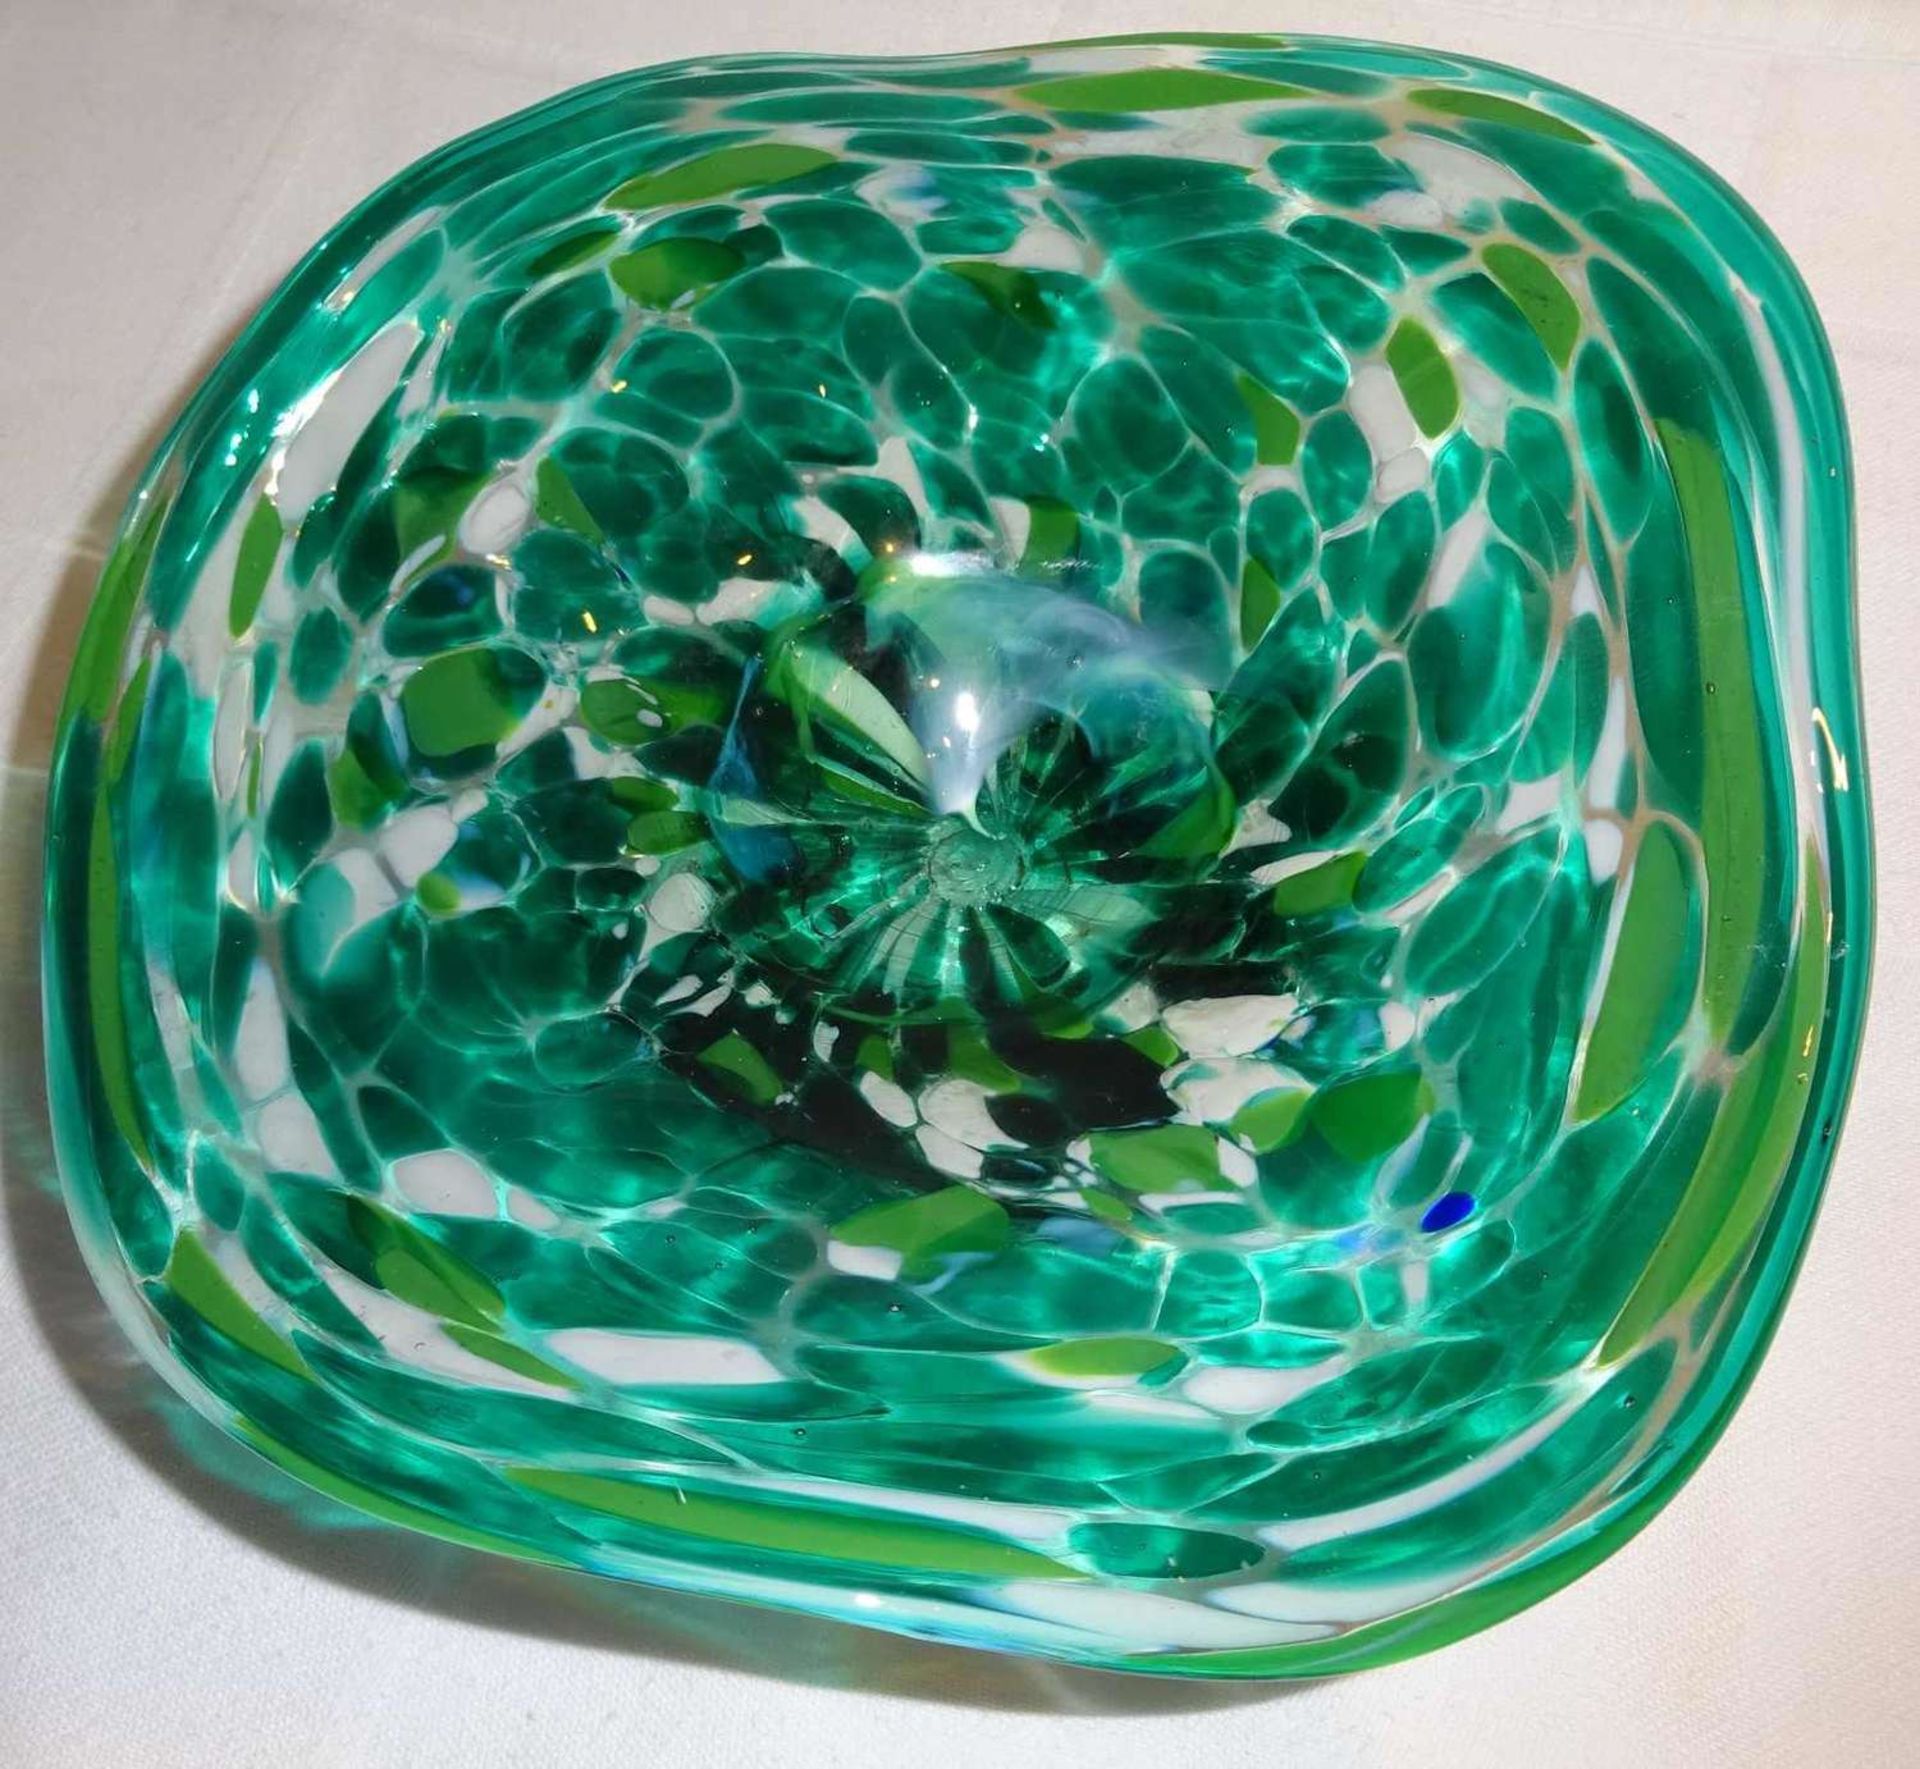 2 Glasschalen Murano / bayr. Wald. Guter Zustand2 glass bowls Murano / Bavarian. Forest. Good condi - Image 3 of 3